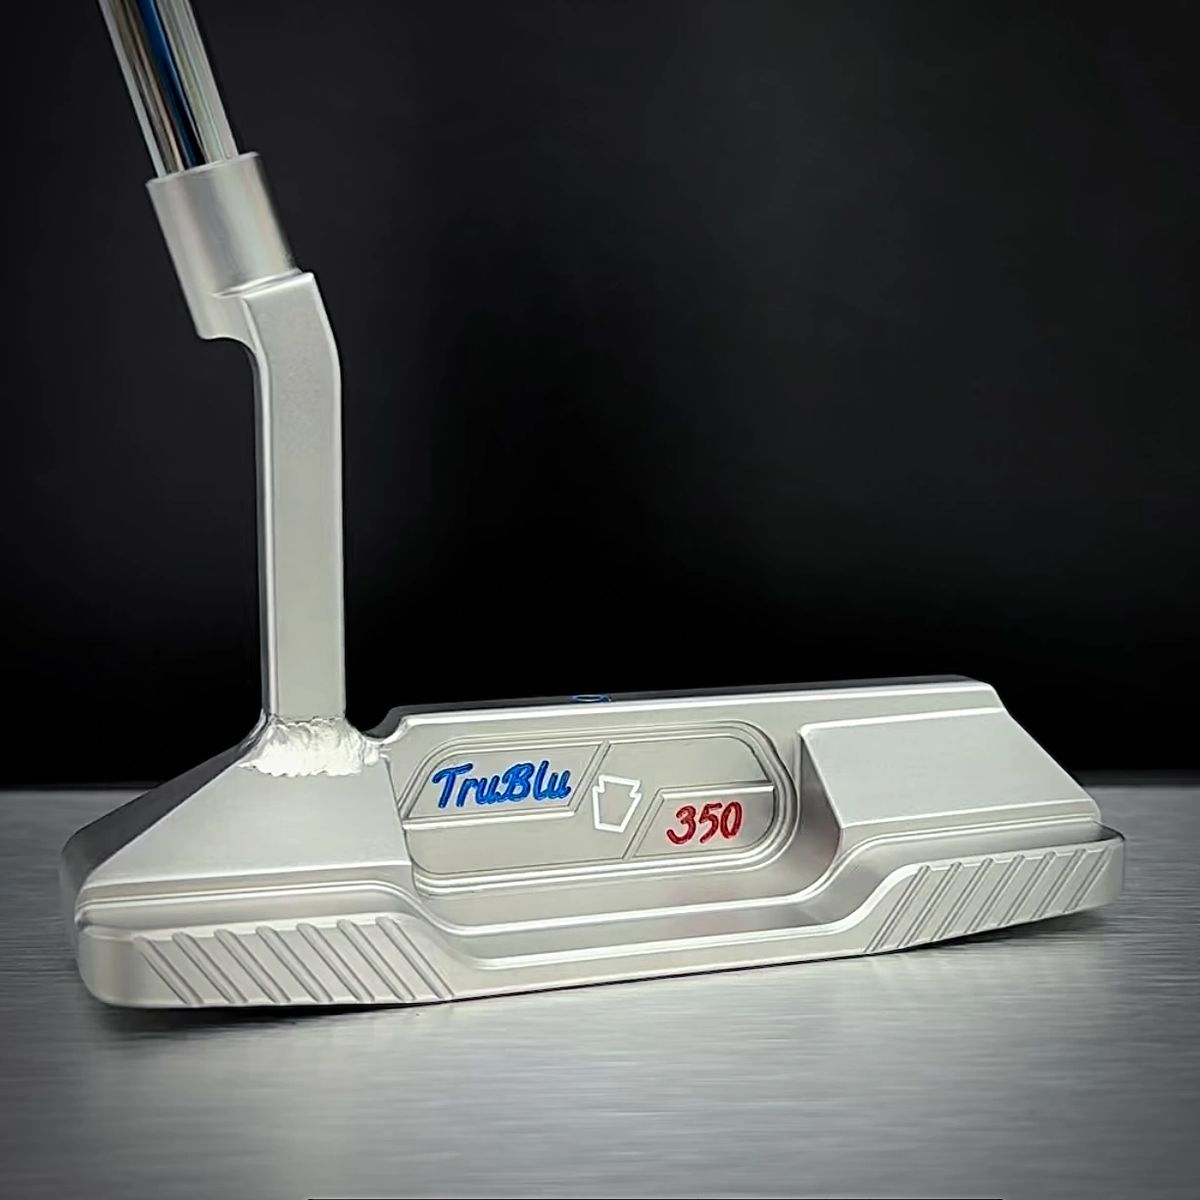 TruBlu Golf Keystone Red, White, and Blue Weld Neck Putter